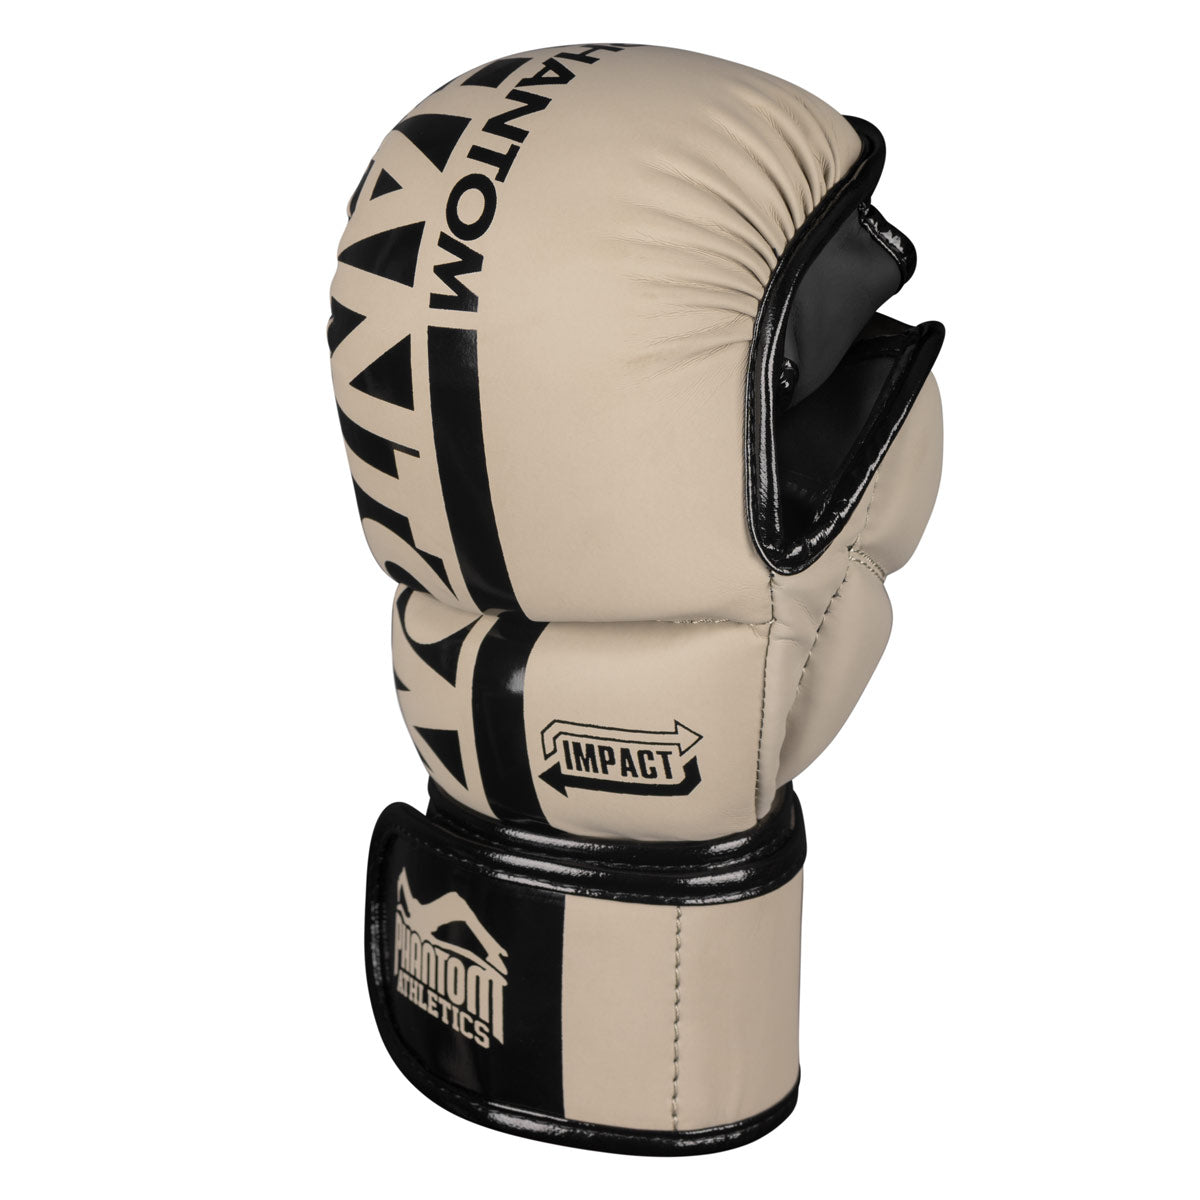 Phantom Apex MMA Sparringshandschuhe für Kampfsport - Linker Handschuh